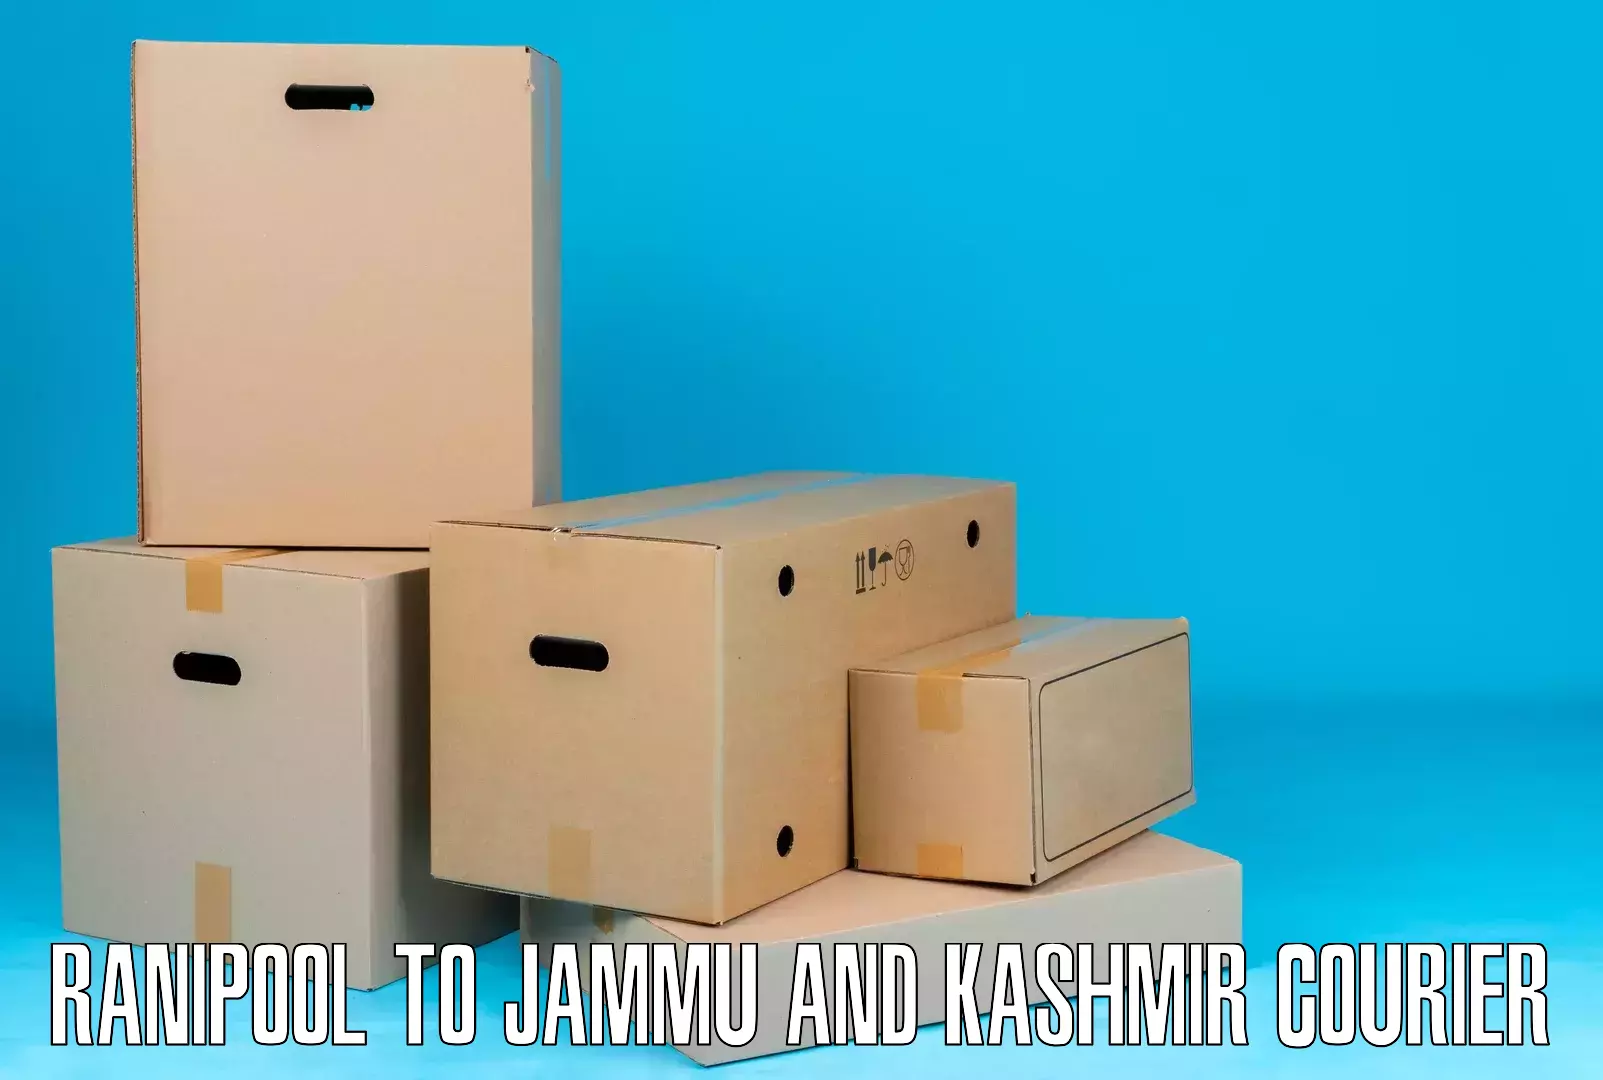 Advanced tracking systems Ranipool to Jammu and Kashmir